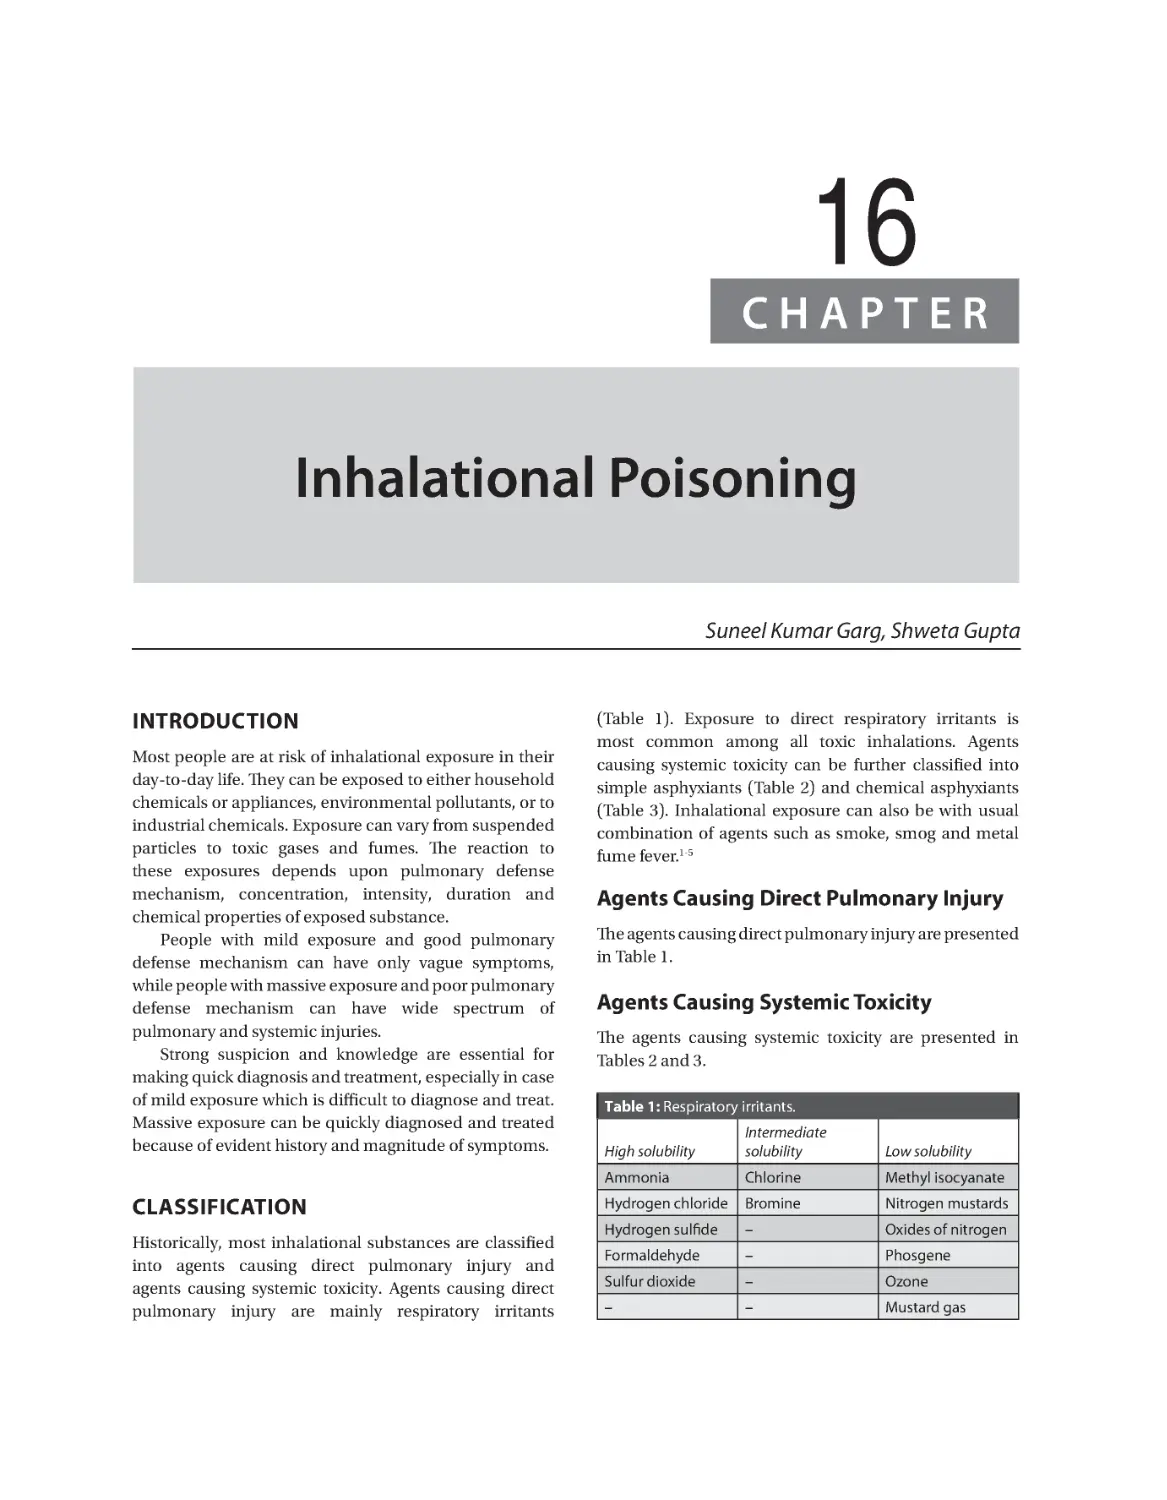 Chapter 16: Inhalational Poisoning